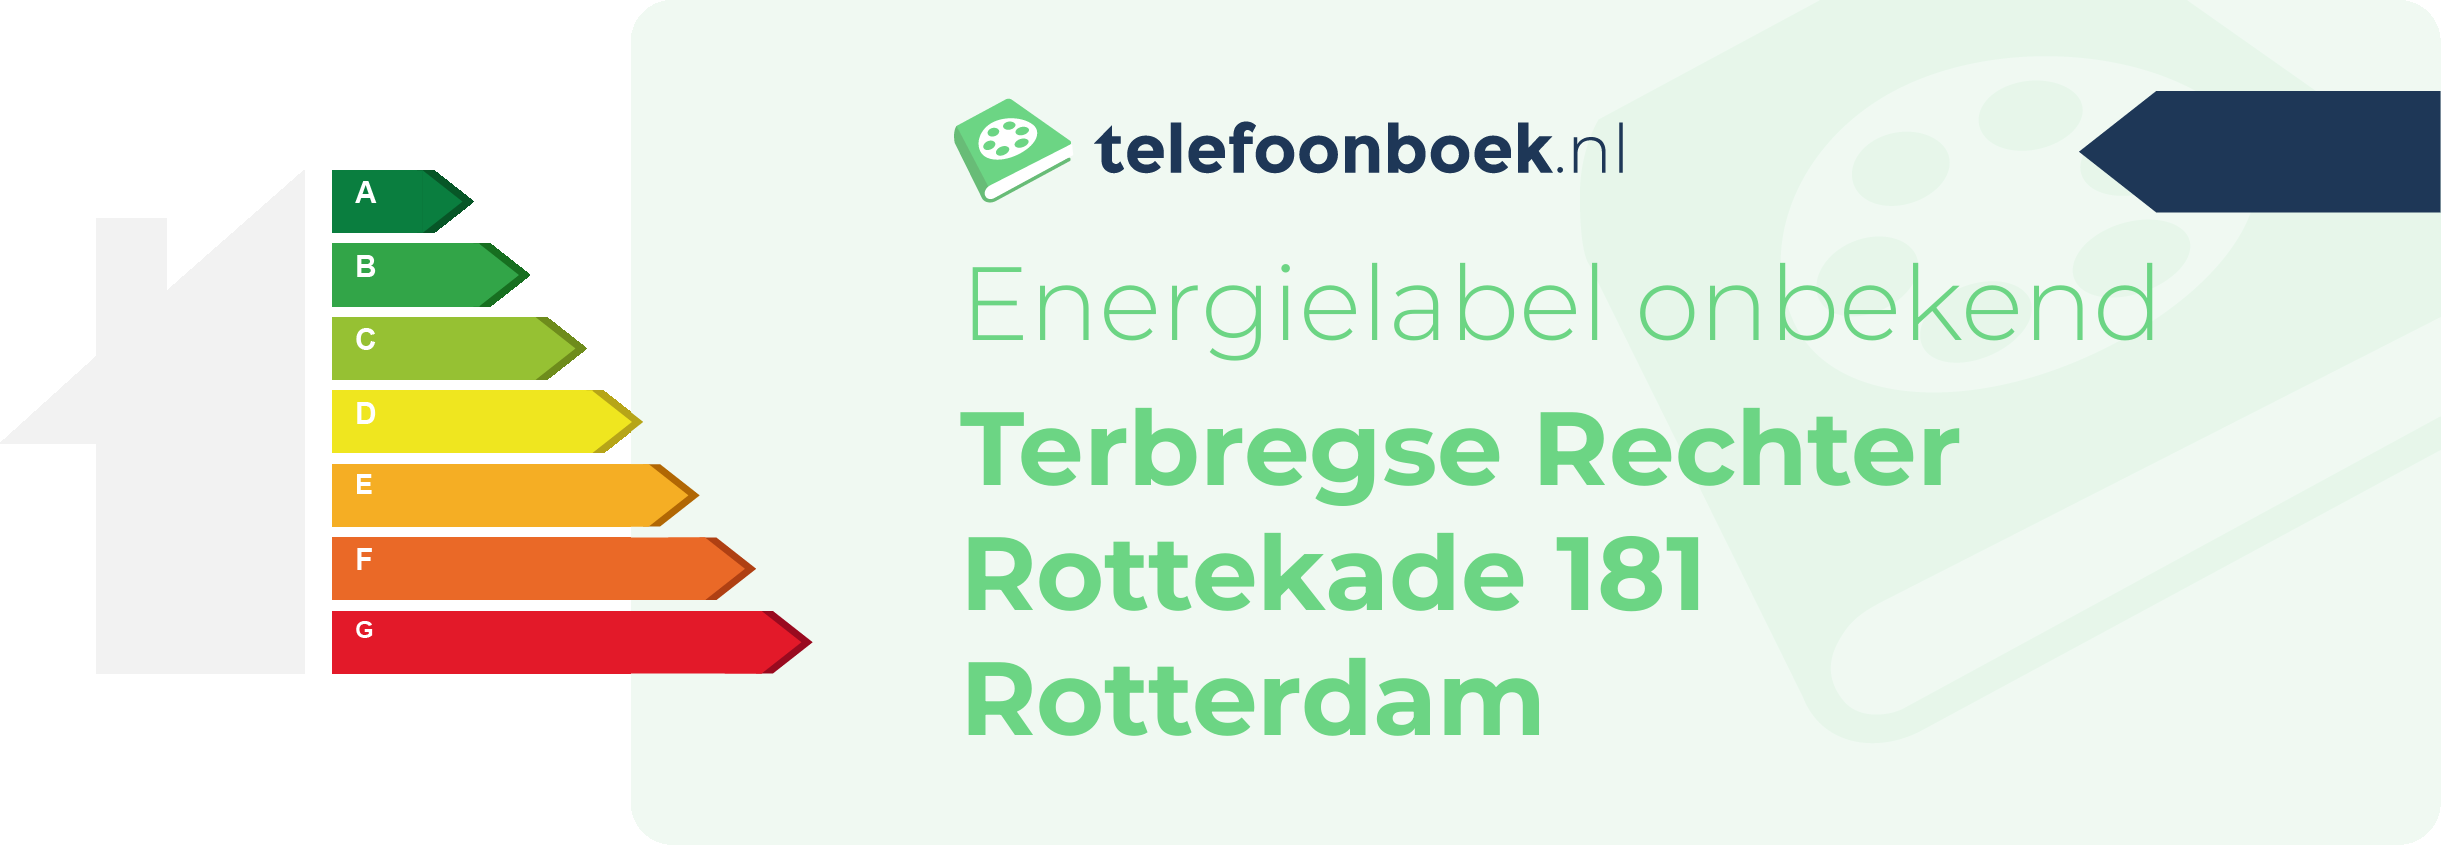 Energielabel Terbregse Rechter Rottekade 181 Rotterdam